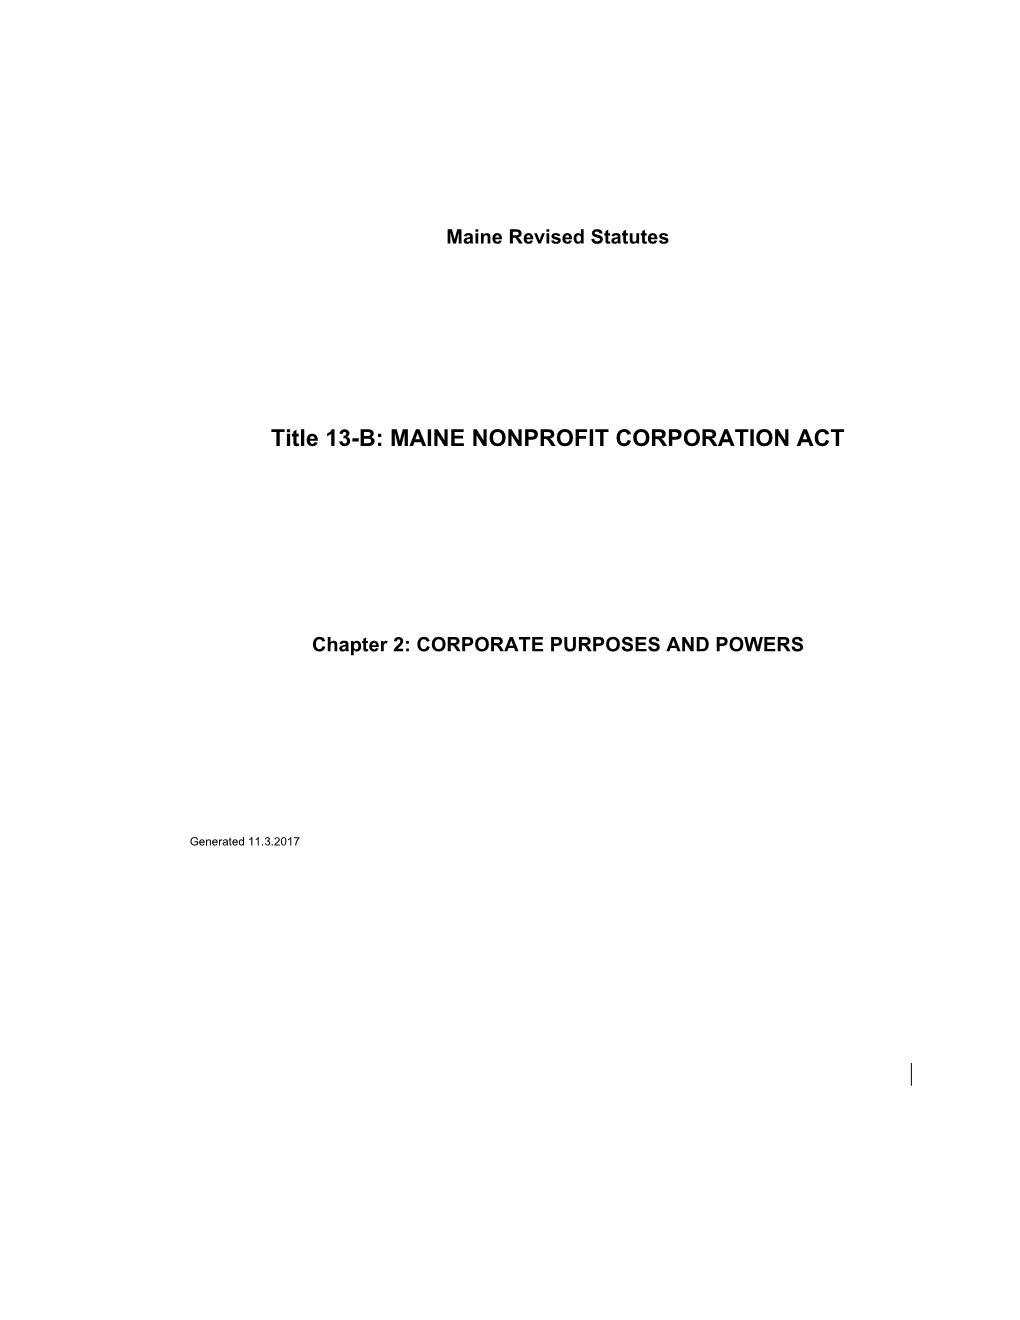 Title 13-B: MAINE NONPROFIT CORPORATION ACT